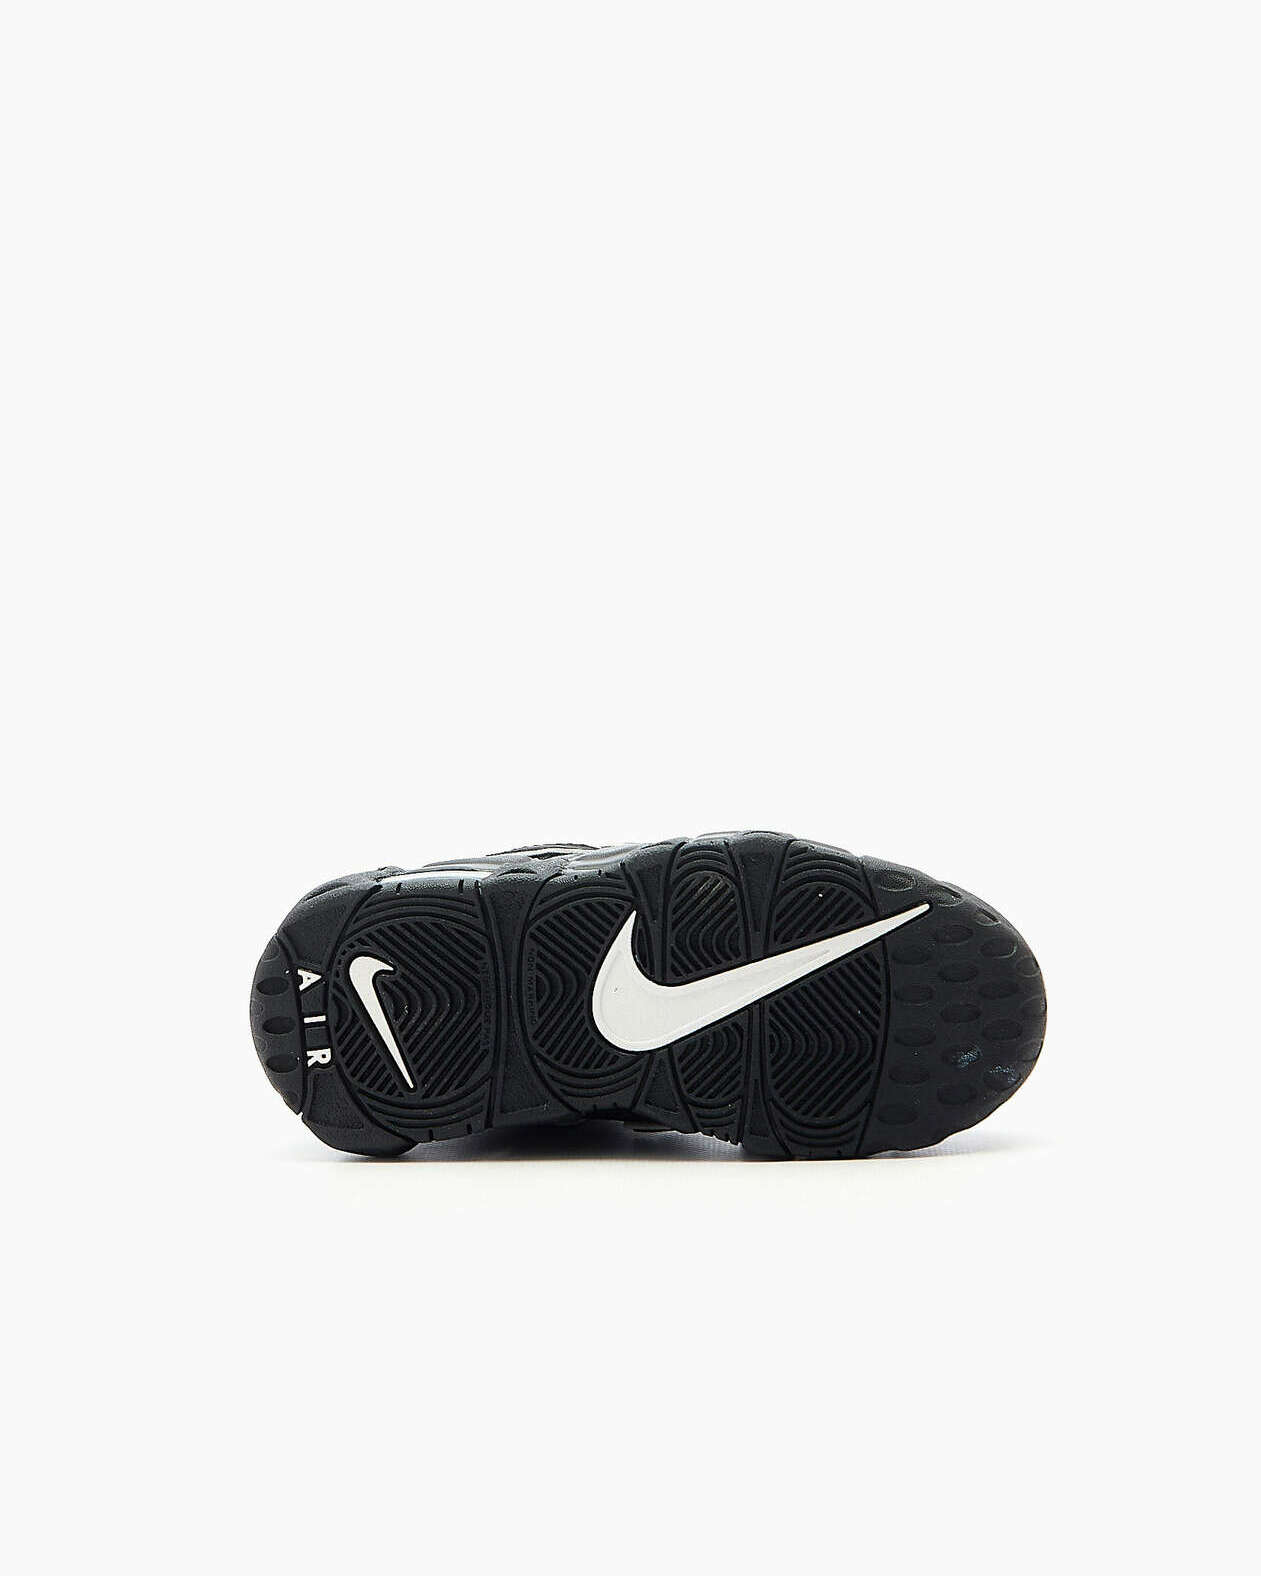 Nike Air uptempo on feet More Uptempo (PS) Black DA8574-002| Buy Online at